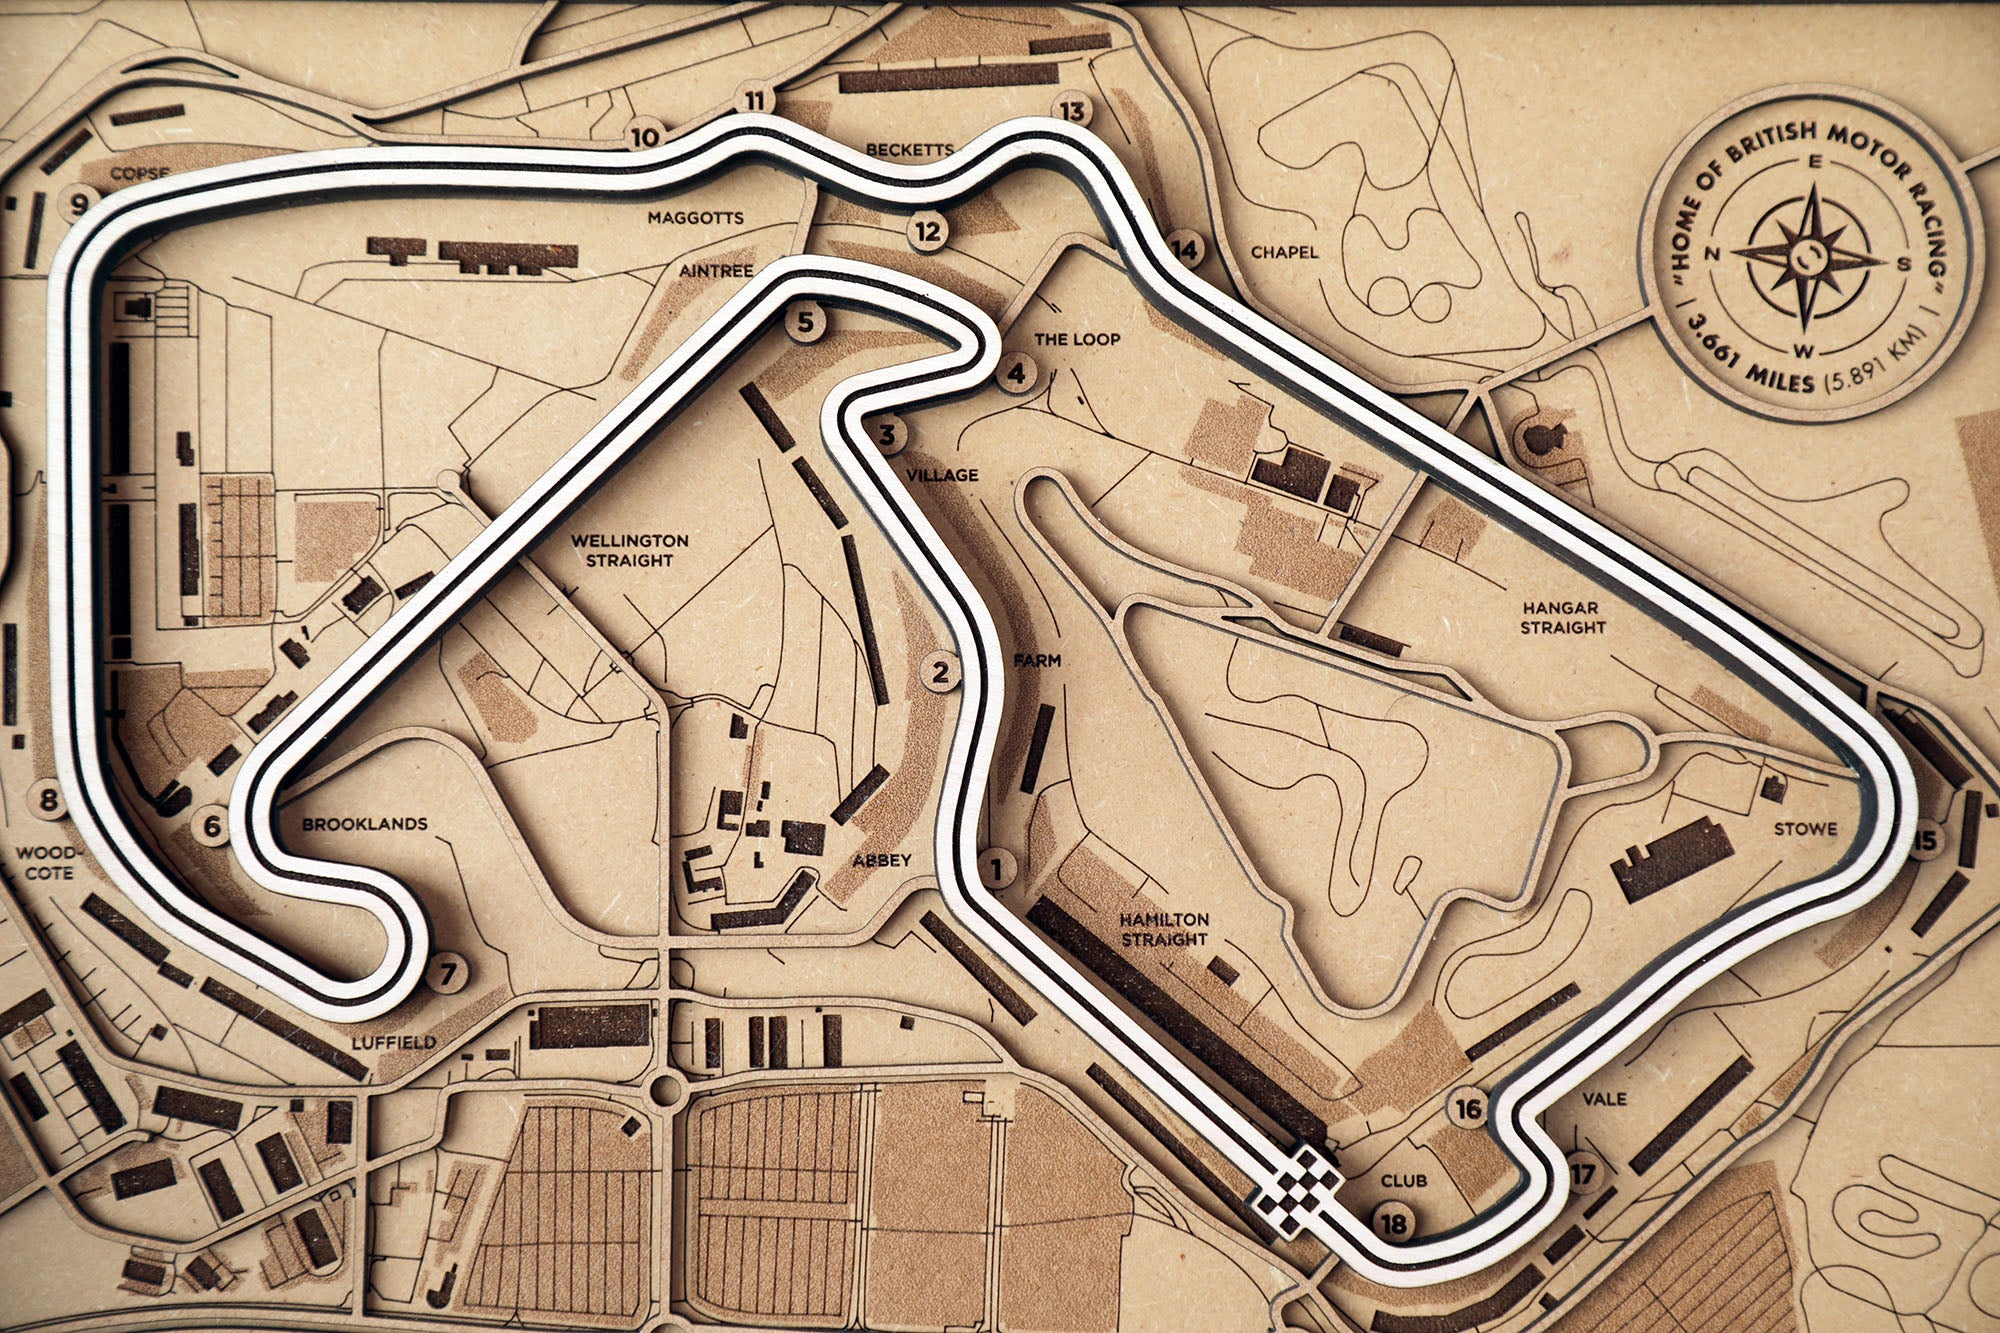 Silverstone Circuit - Formula 1 - 3D Wood Track Map